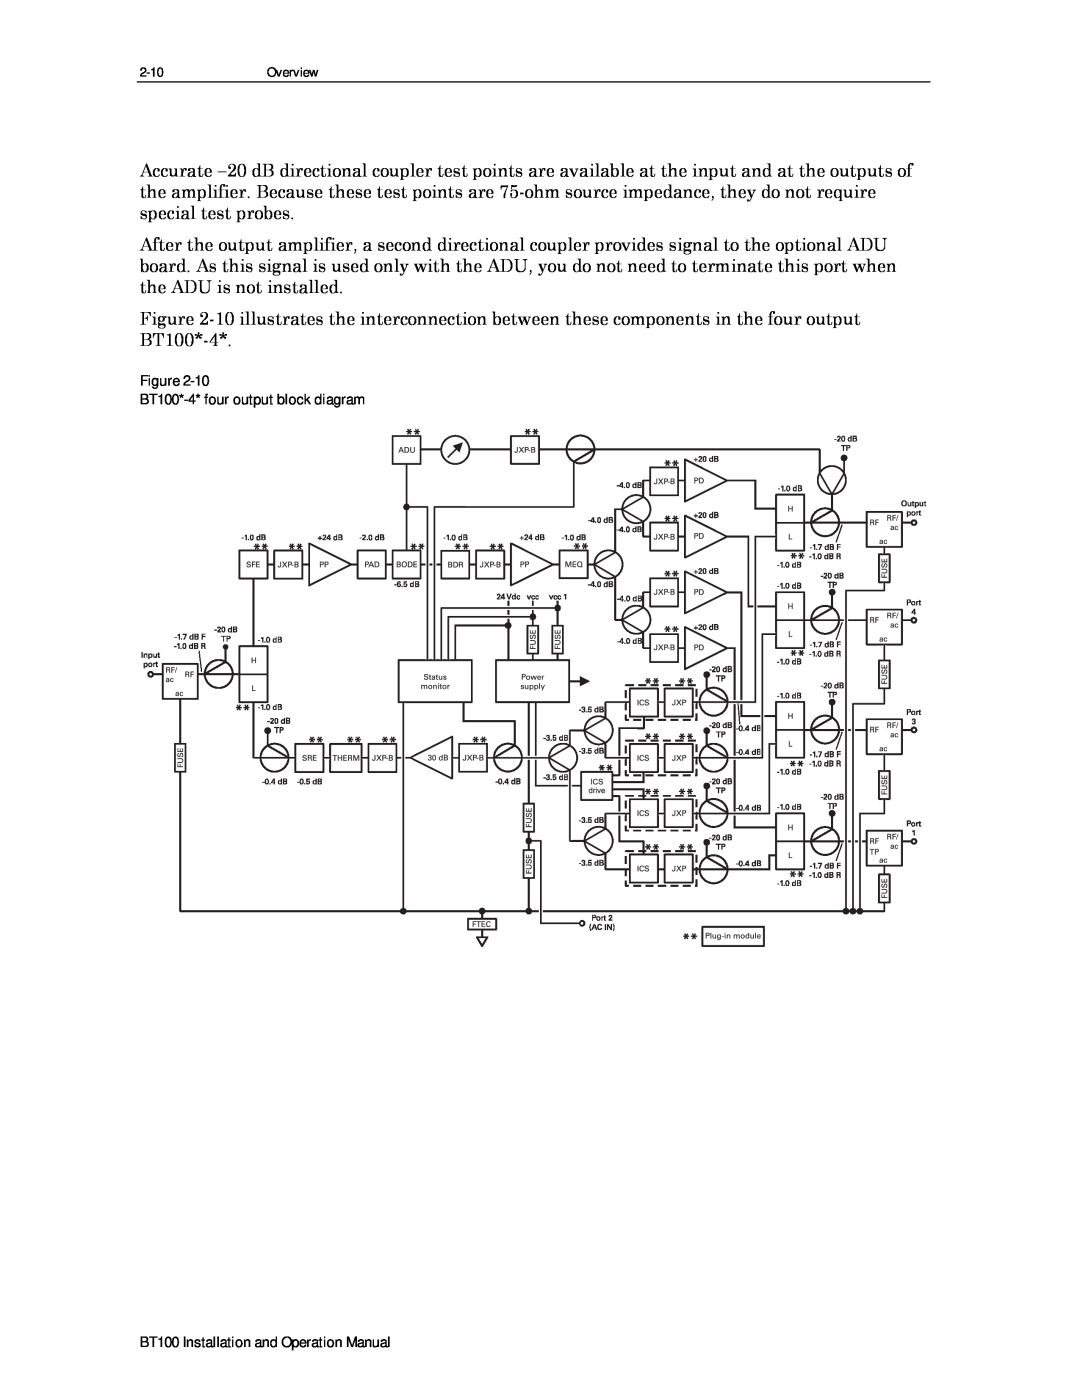 Motorola operation manual Figure BT100*-4*four output block diagram, 2-10Overview 